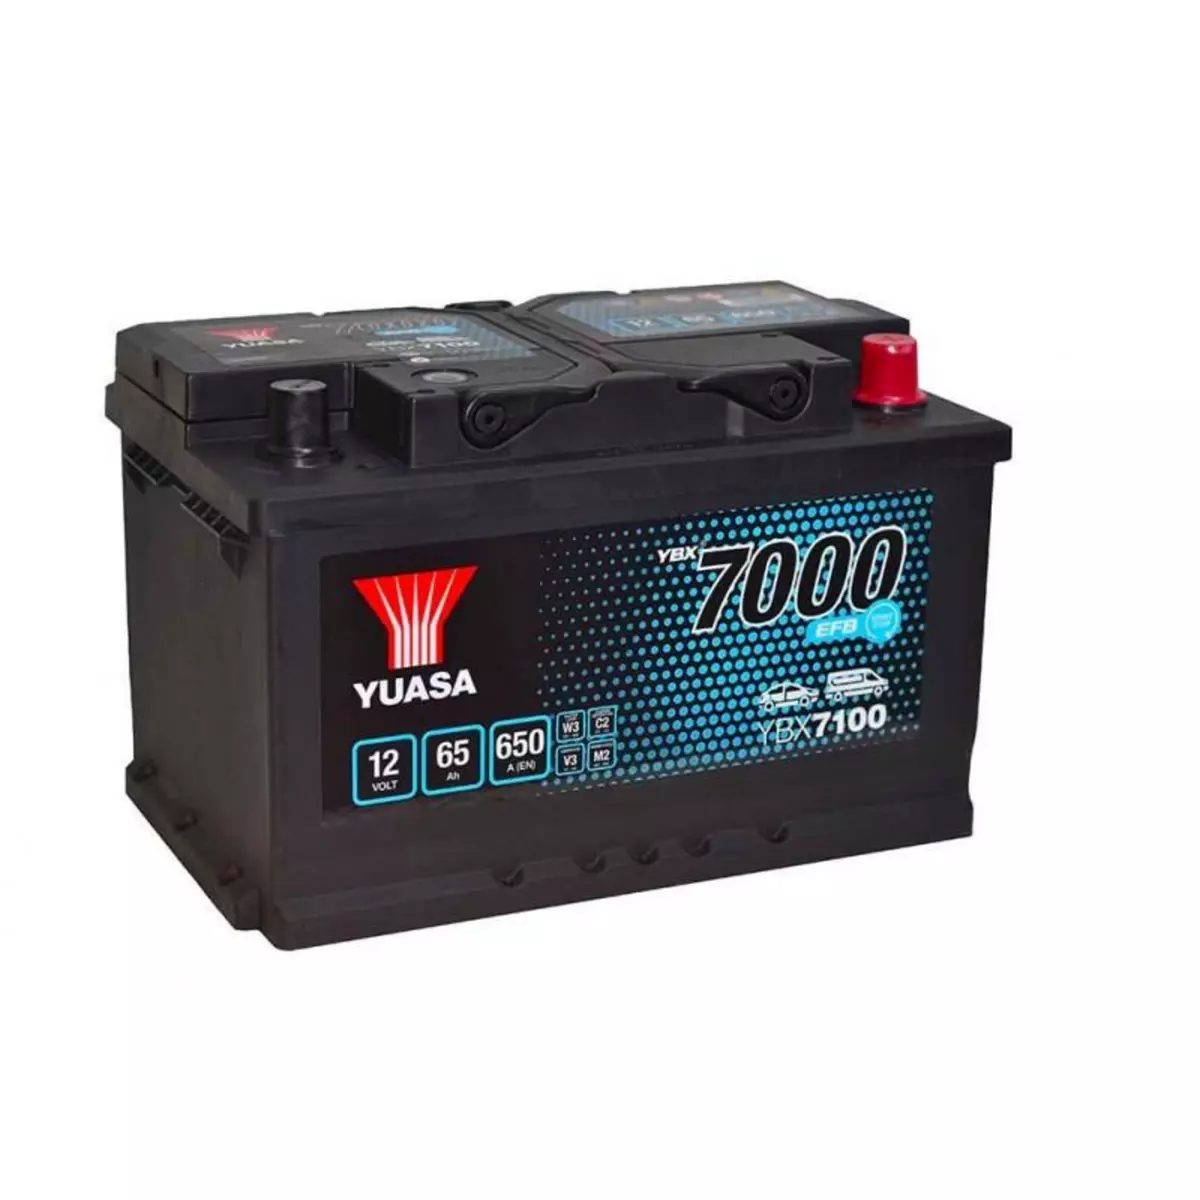 YUASA Batterie YUASA YBX7100 EFB 12V 65AH 650A LB3D